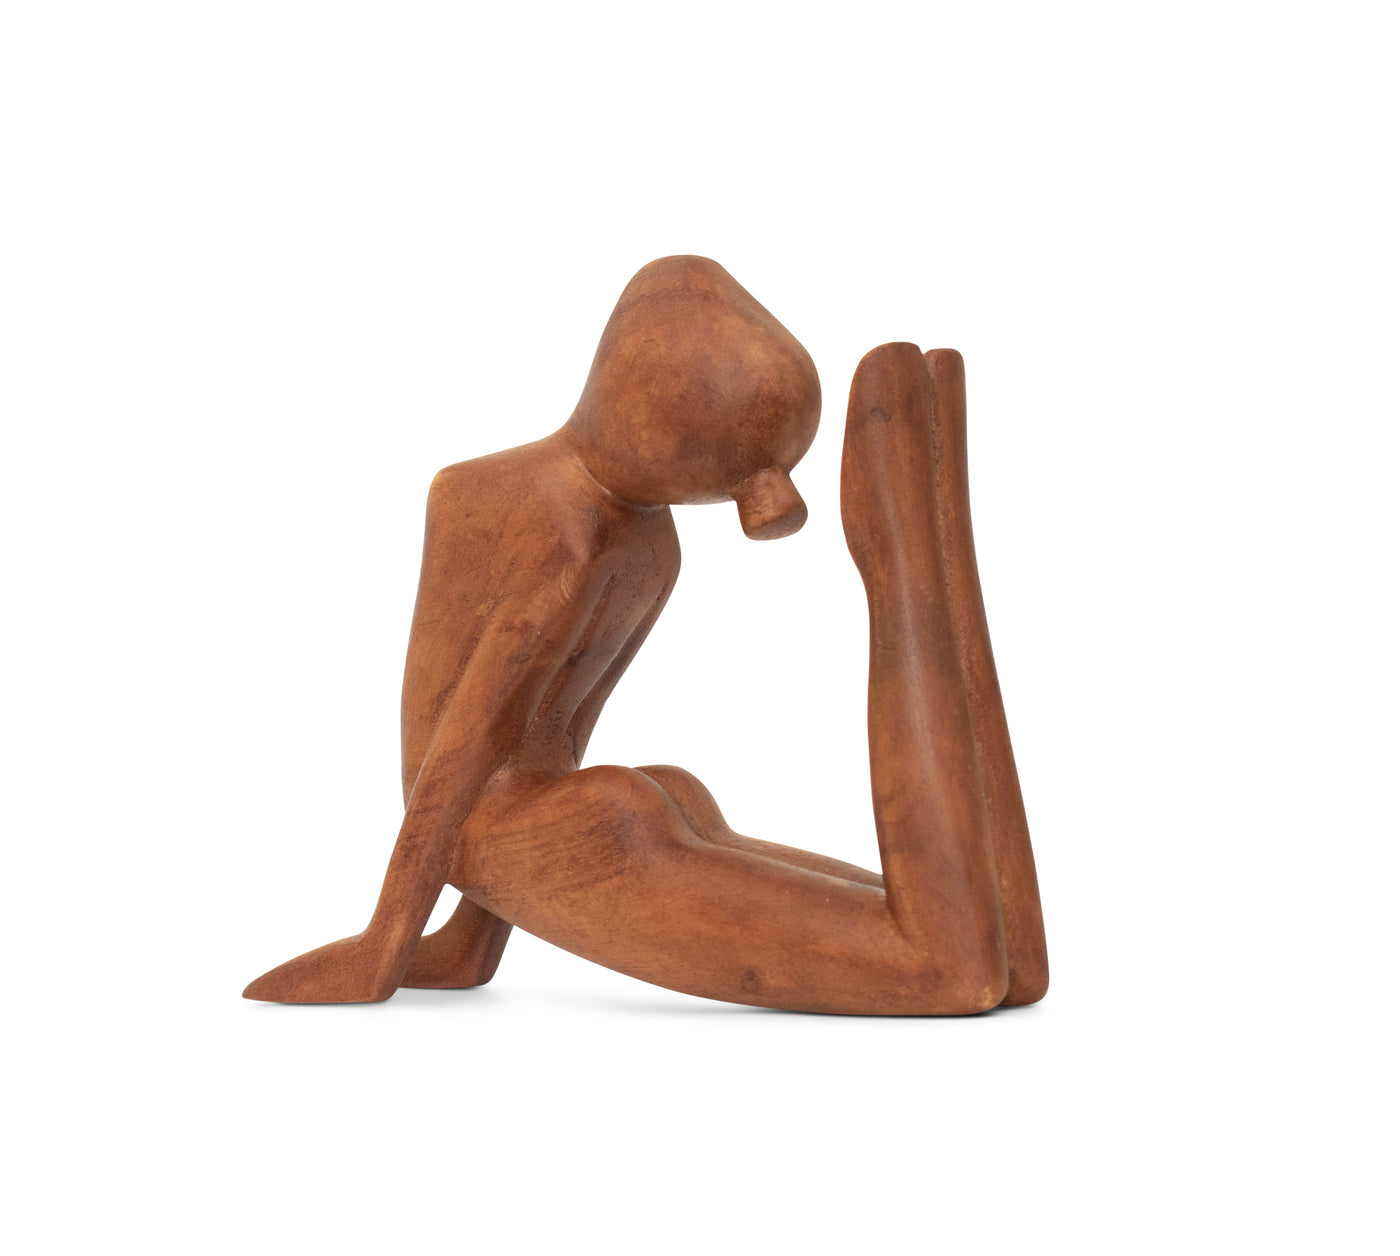 8" Wooden Handmade Mini Yoga Figurines, Yoga Pose Statue, Yoga Room Studio Decor, Mindful Home Decor Yogi Gift, Decorative Shelf Decor Objects - King Cobra Pose